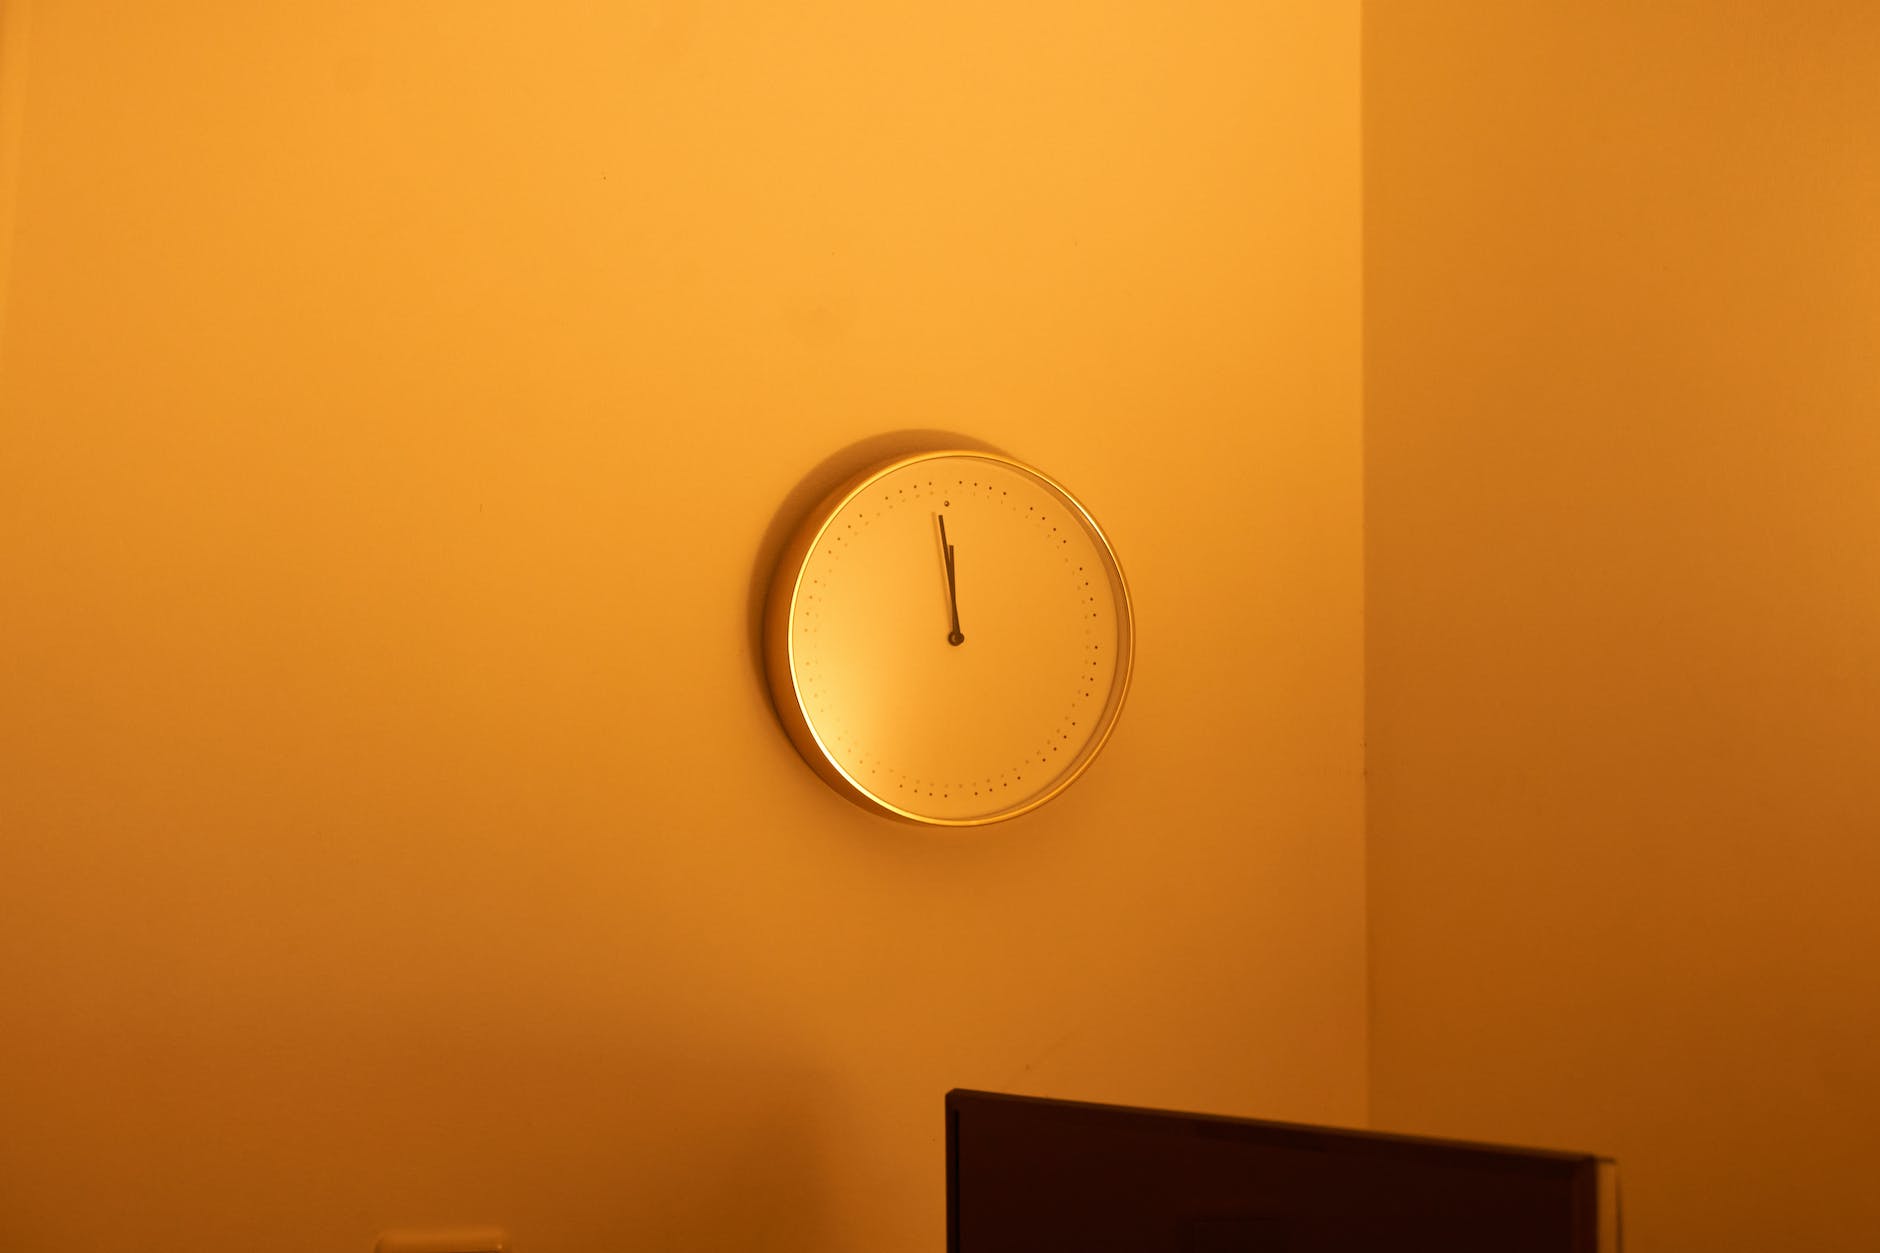 photo of an analog clock on an orange wall